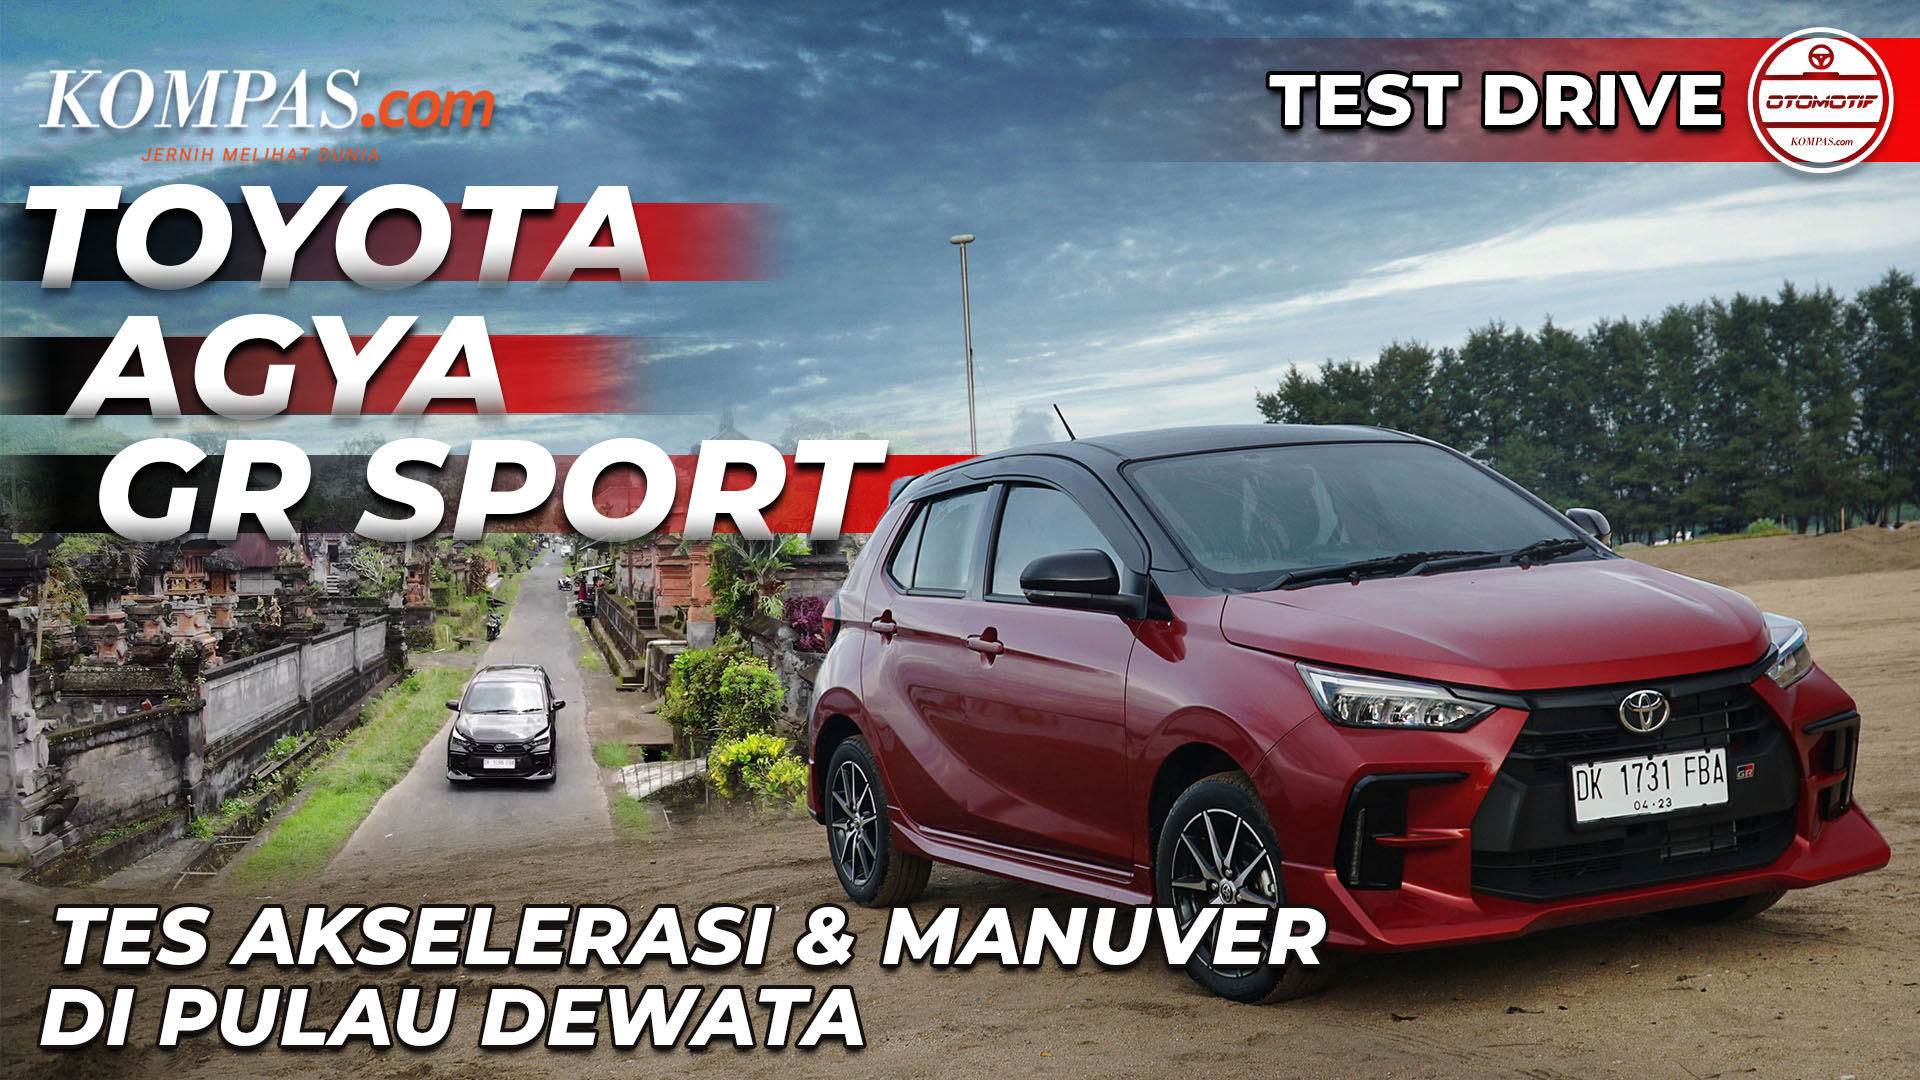 TEST DRIVE | Toyota Agya GR Sport | Tes Akselerasi & Manuver